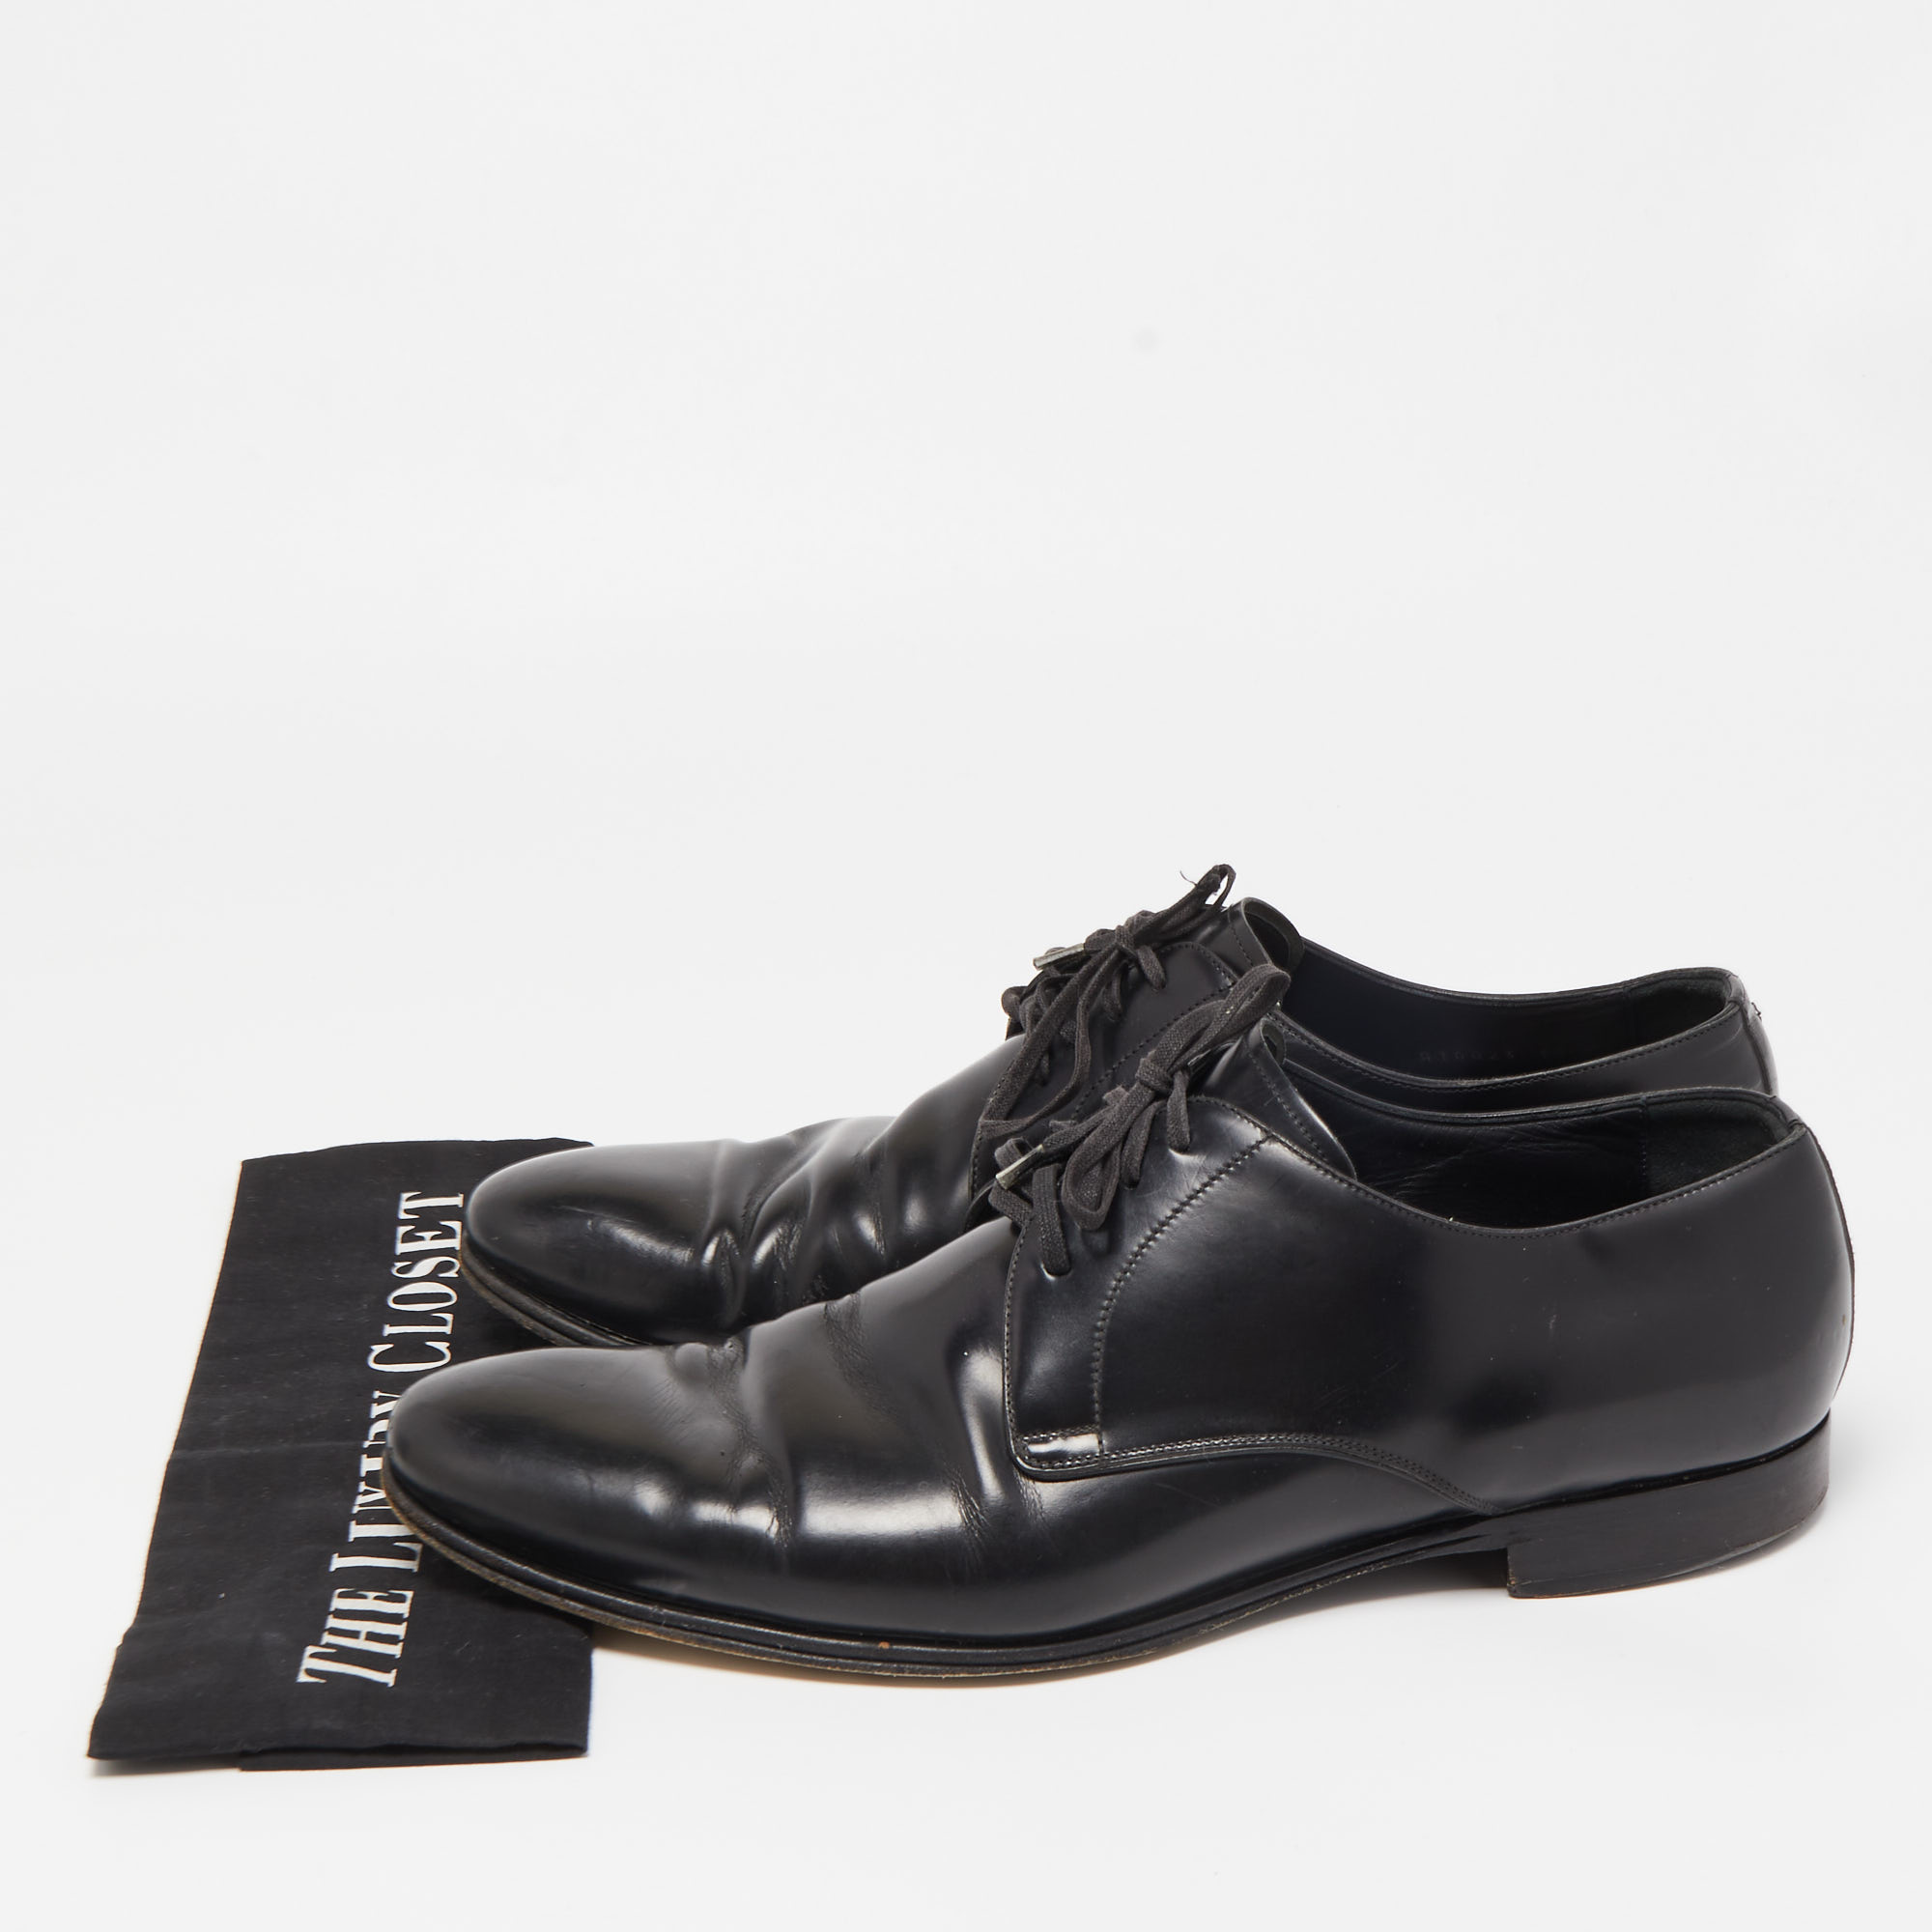 Dolce & Gabbana Black Leather Lace Up Oxford Size 44